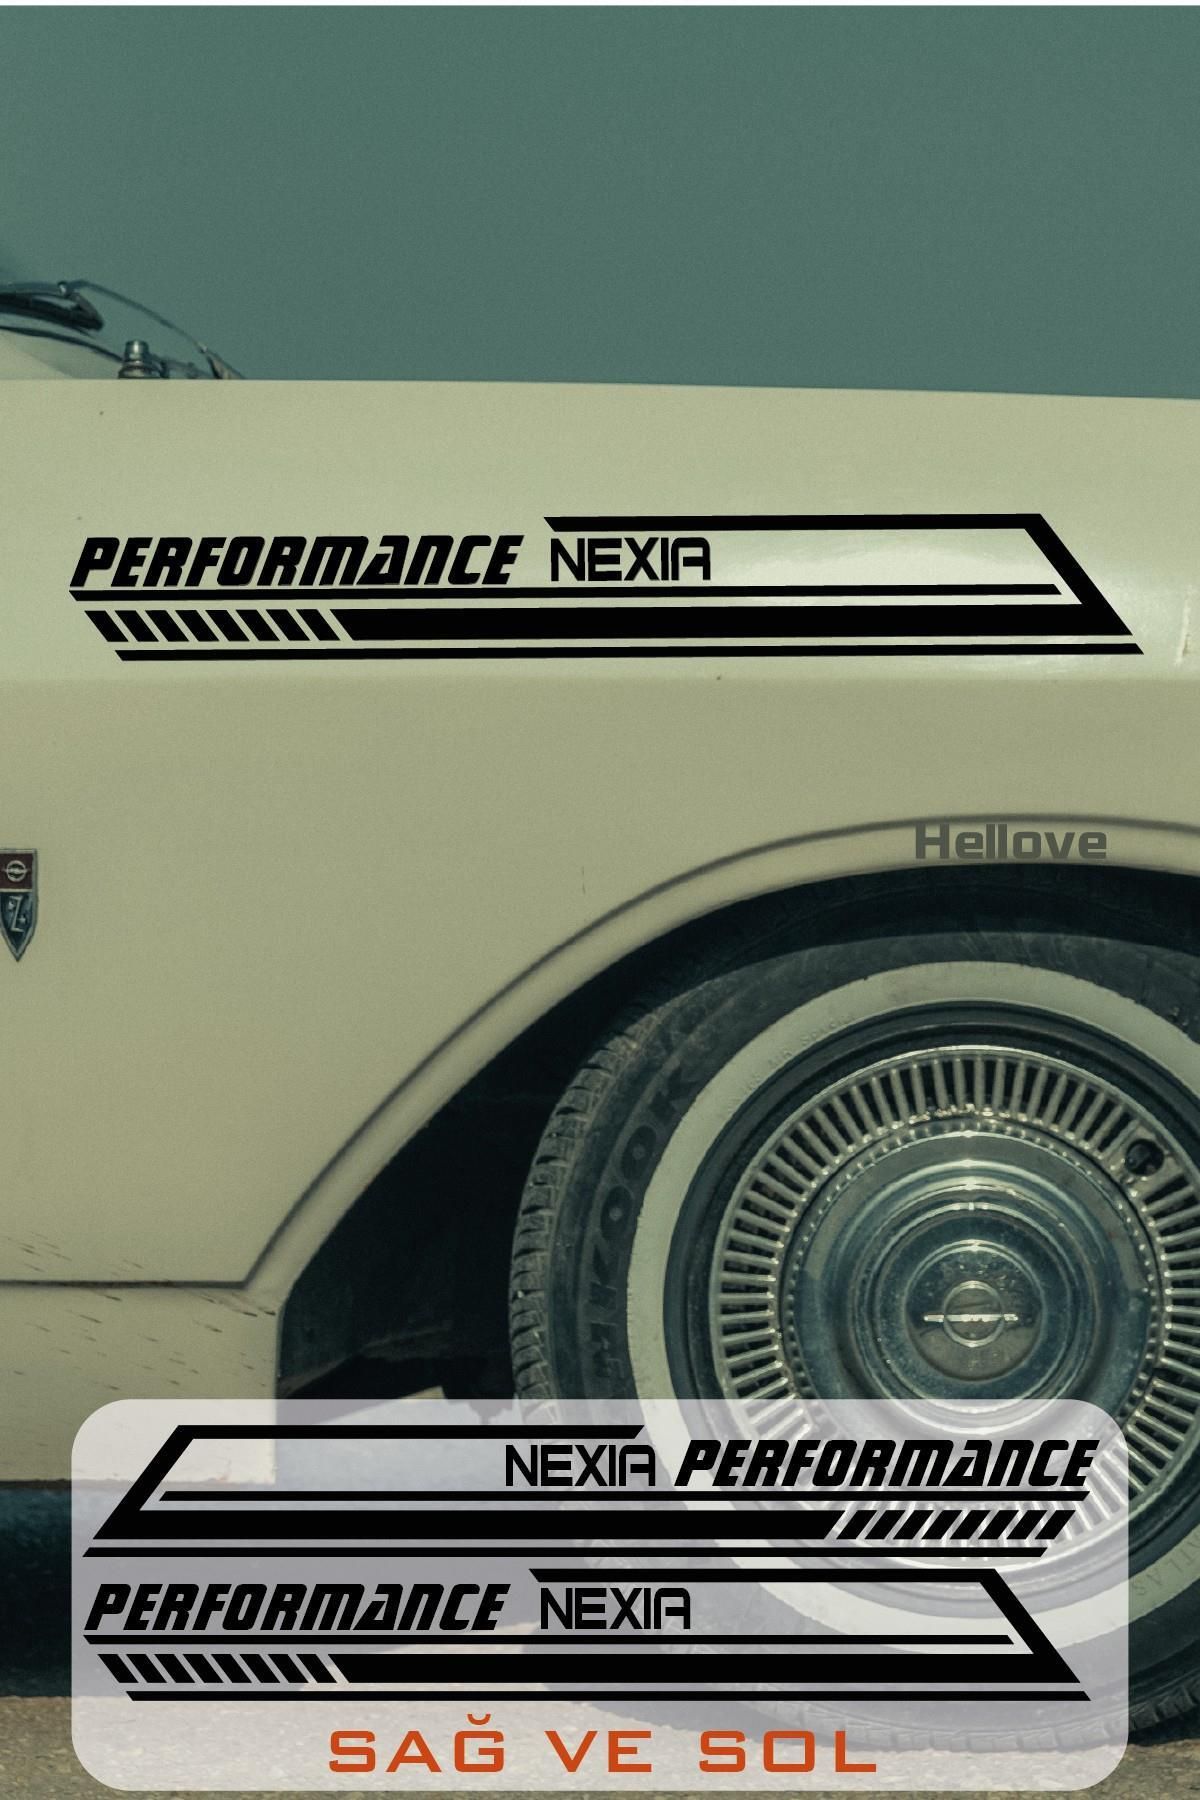 Hellove Daewoo Nexia Yan Şerit Performance Oto Araba Uyumlu Sticker Sağ ve Sol Siyah 55*16 Cm